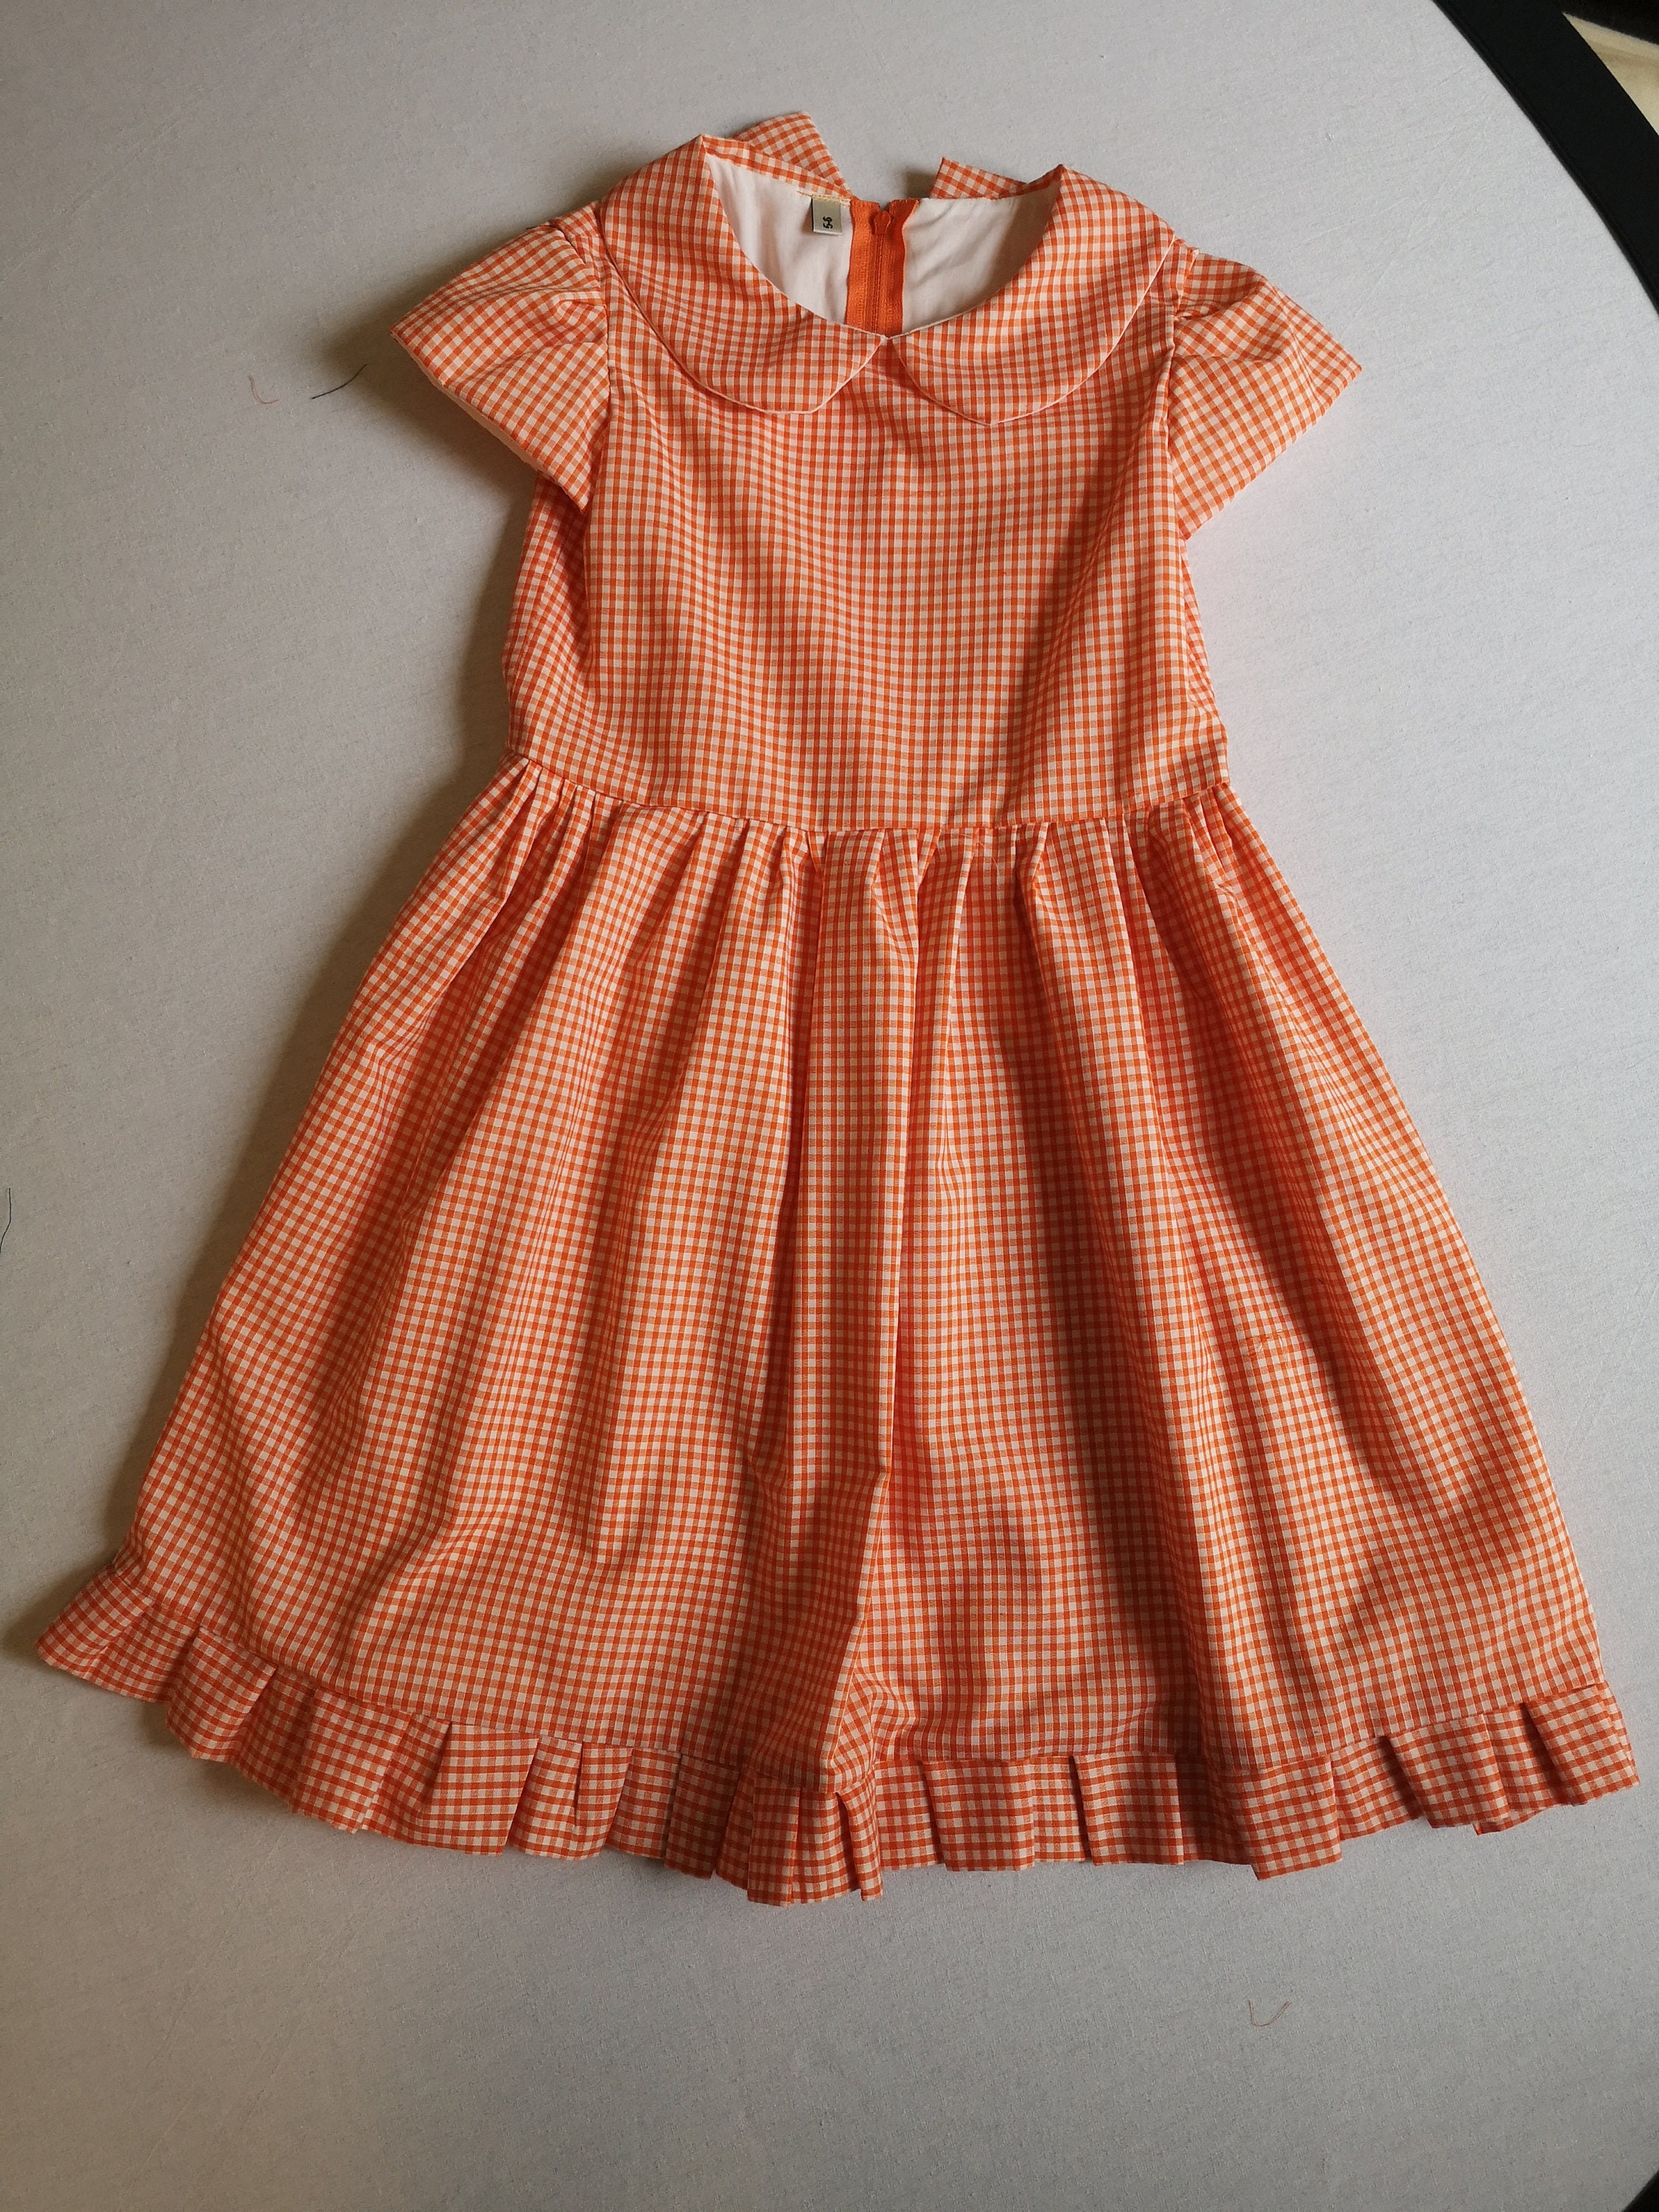 orange gingham dress